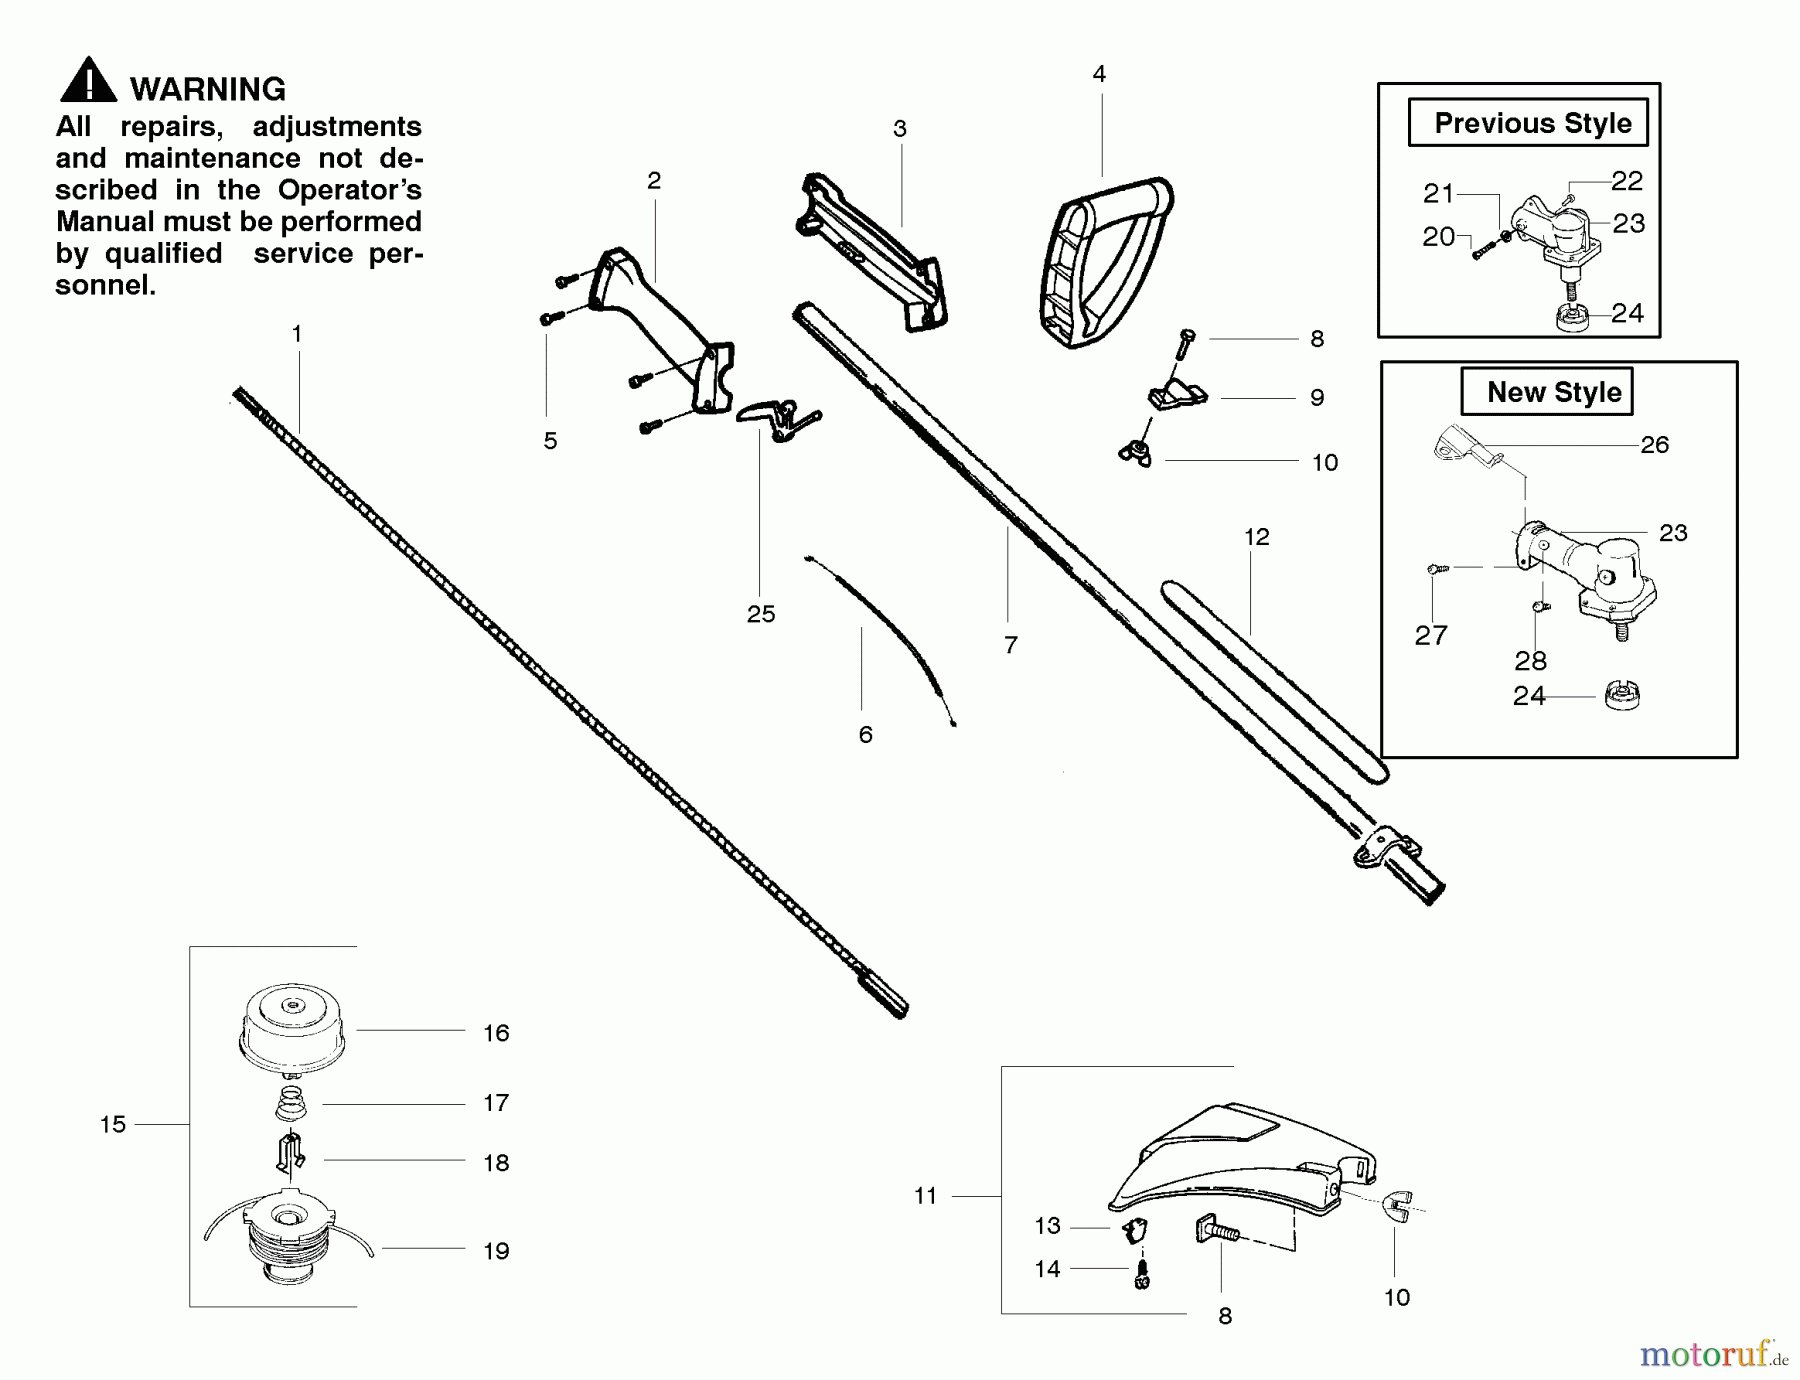  Poulan / Weed Eater Motorsensen, Trimmer XT600 (Type 4) - Weed Eater String Trimmer Handle & Shaft Assembly